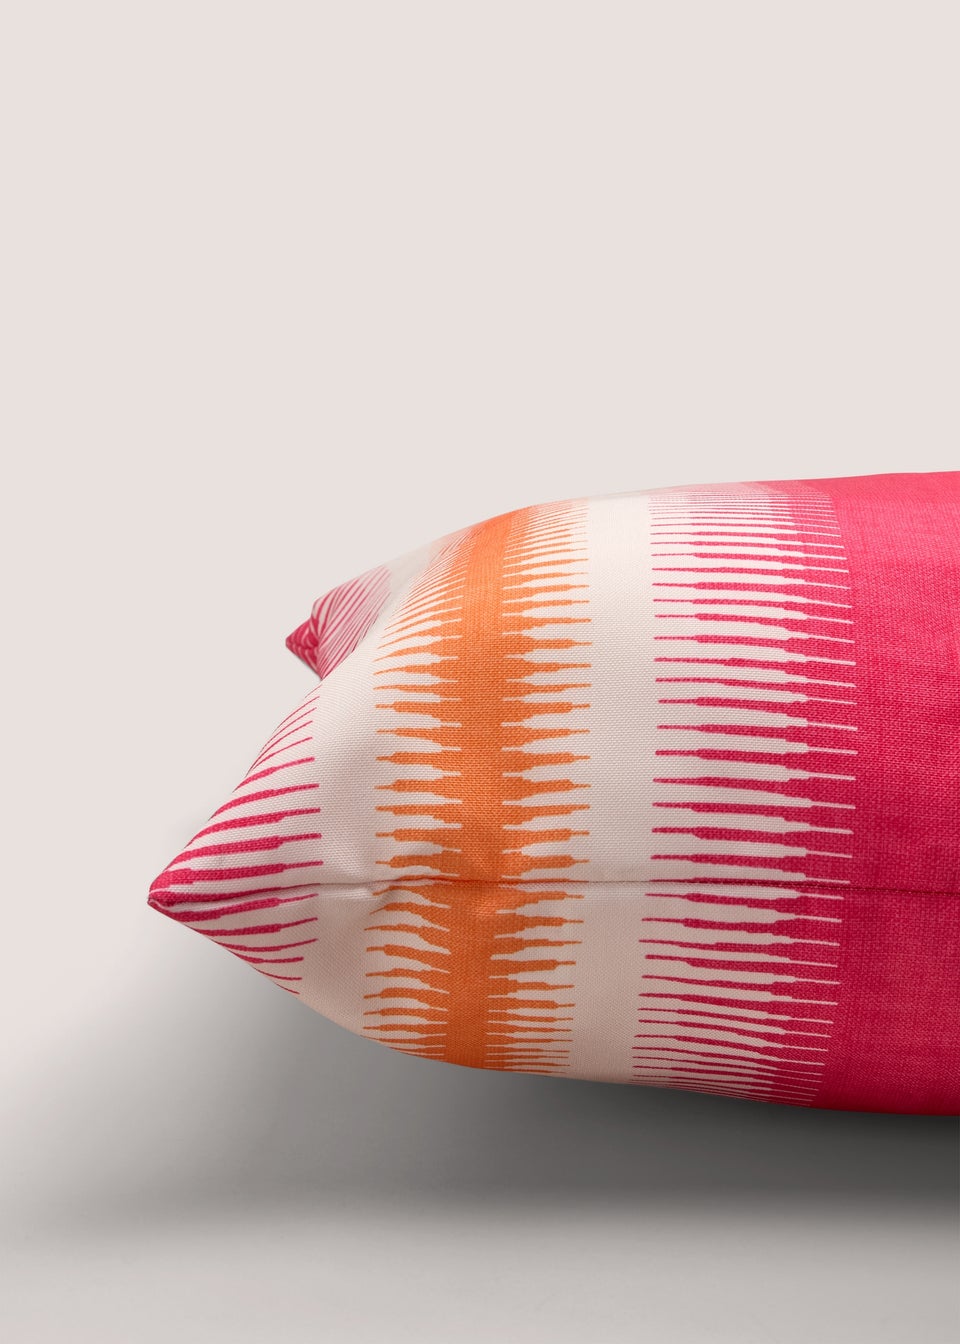 Outdoor Multicolour Global Stripe Scatter Cushion (43cm x 43cm)